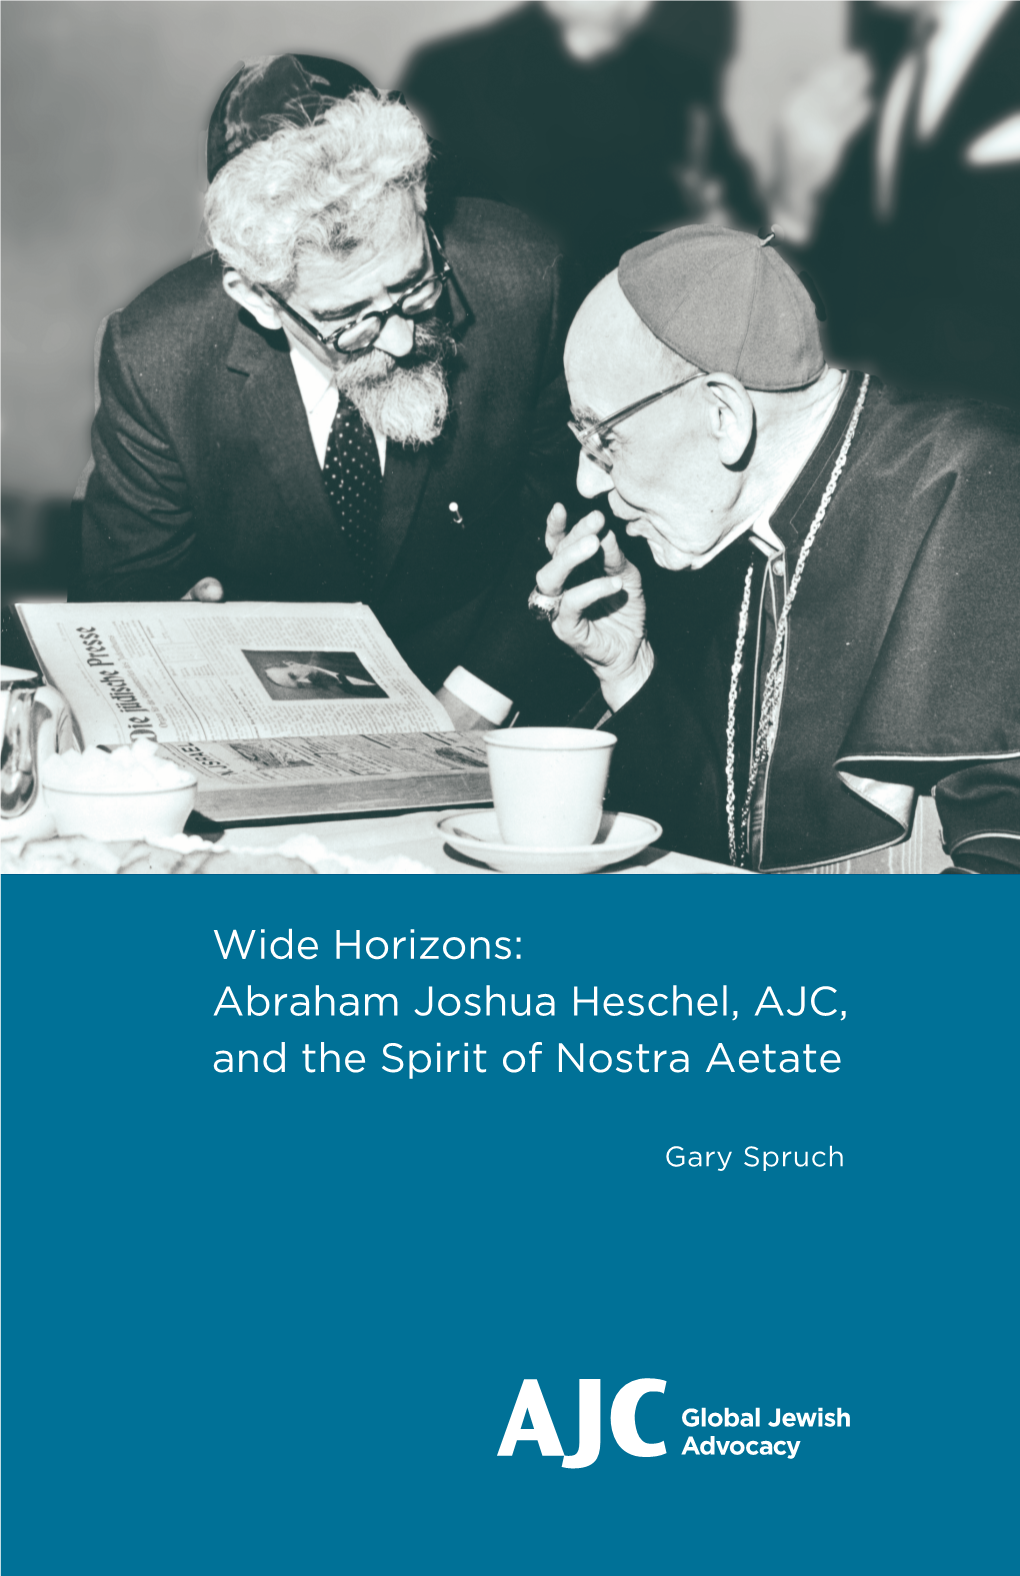 Wide Horizons: Abraham Joshua Heschel, AJC, and the Spirit of Nostra Aetate